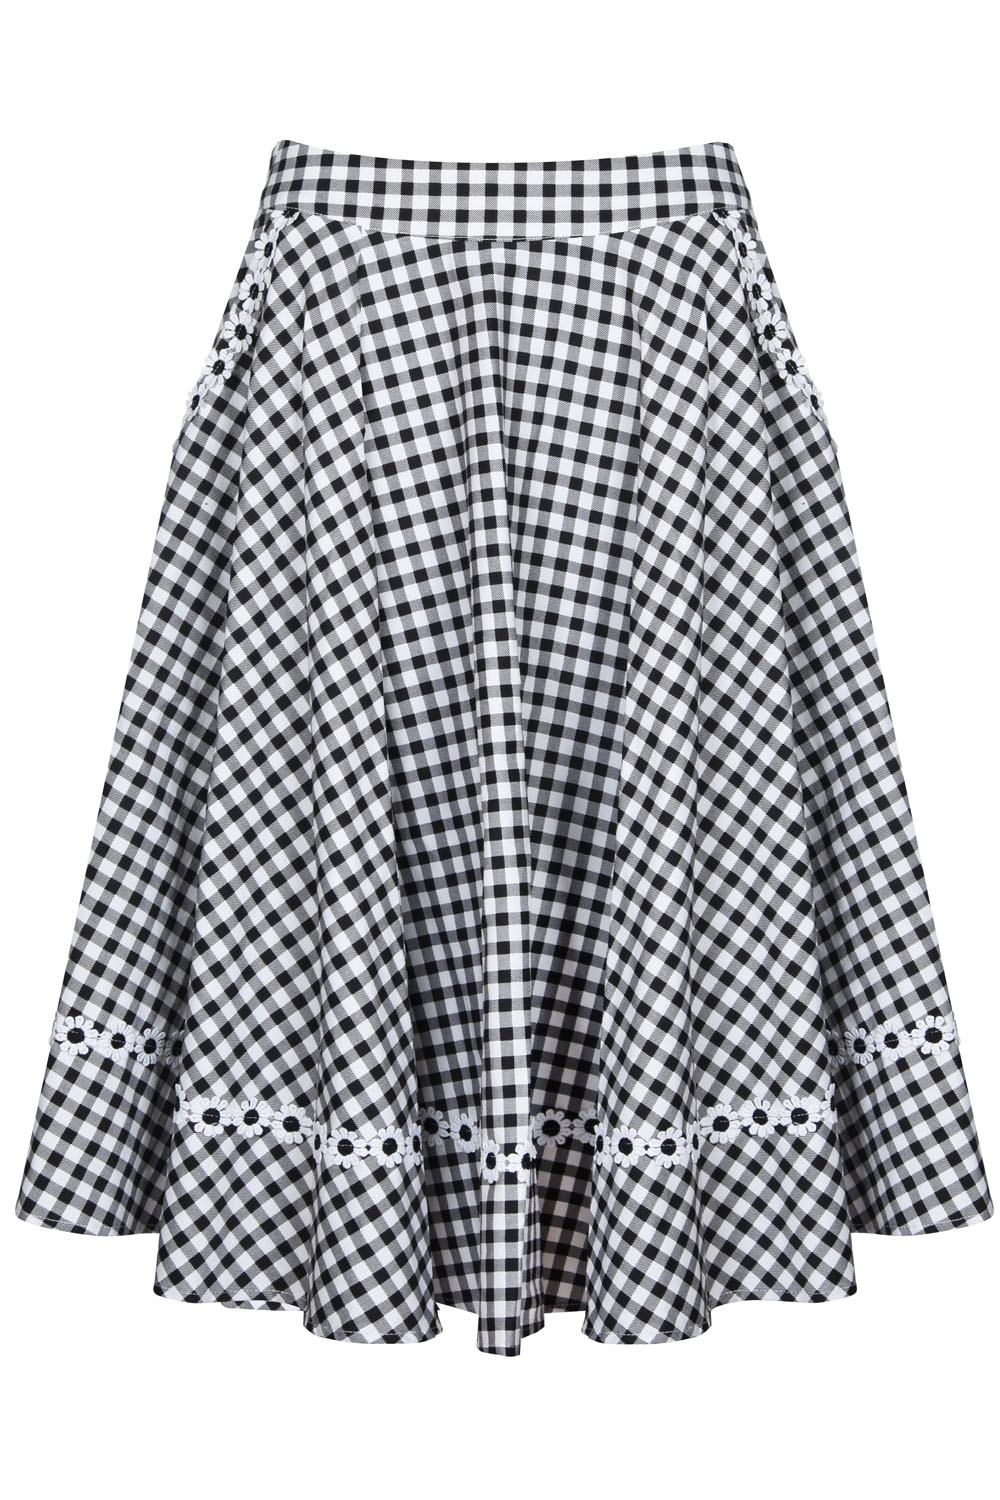 Ava Daisy trim Gingham flare Skirt | Vintage Inspired Fashion ...